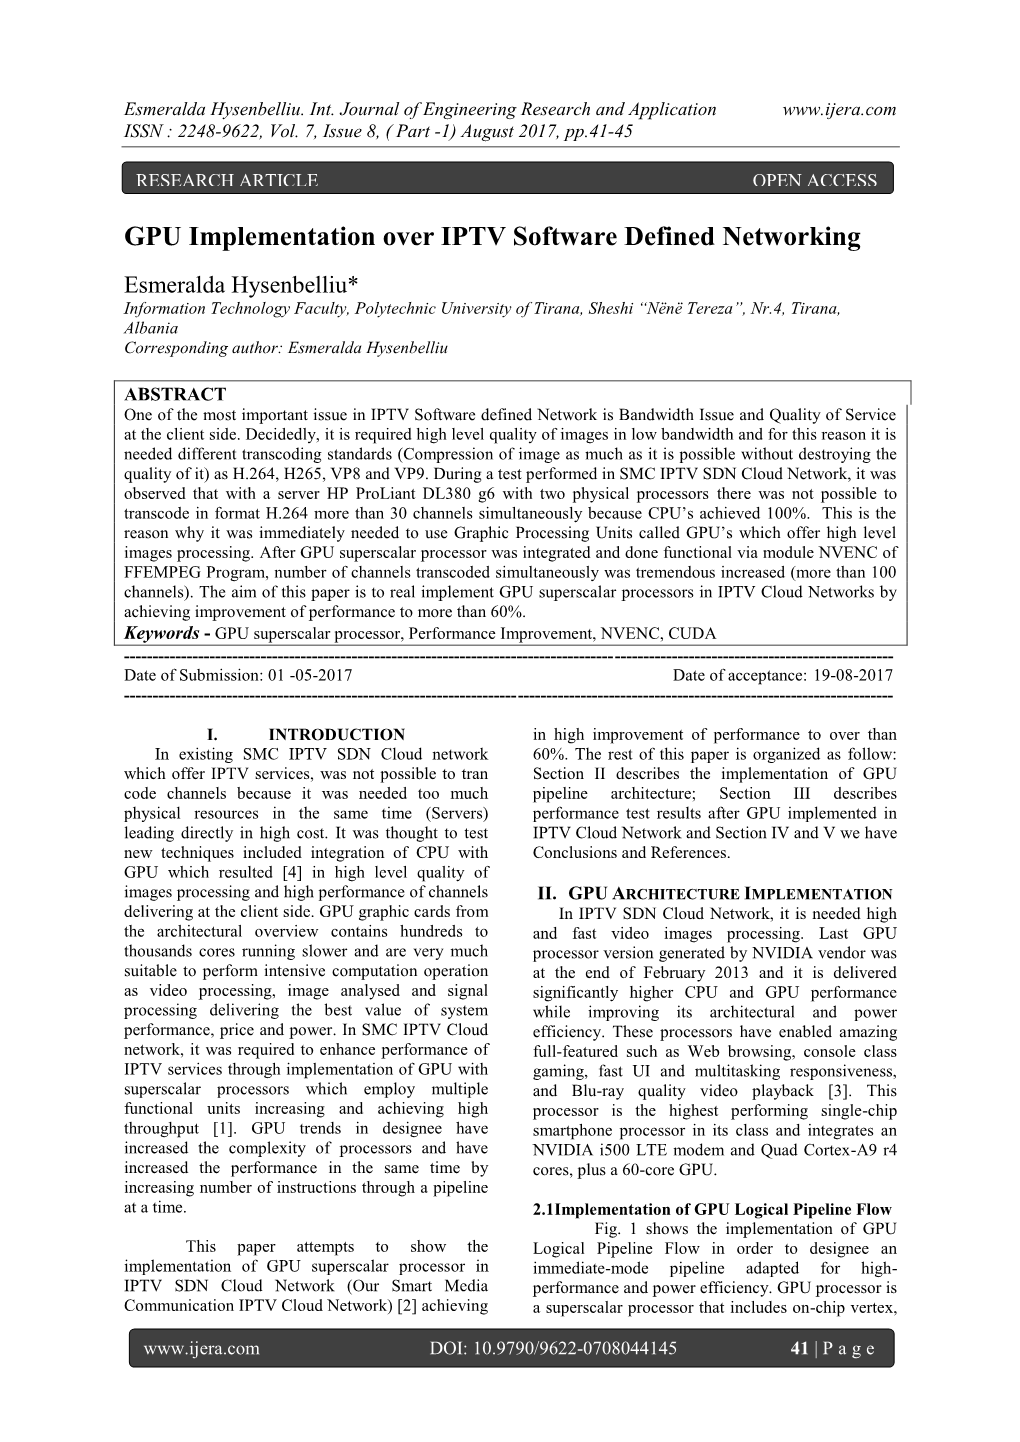 GPU Implementation Over IPTV Software Defined Networking